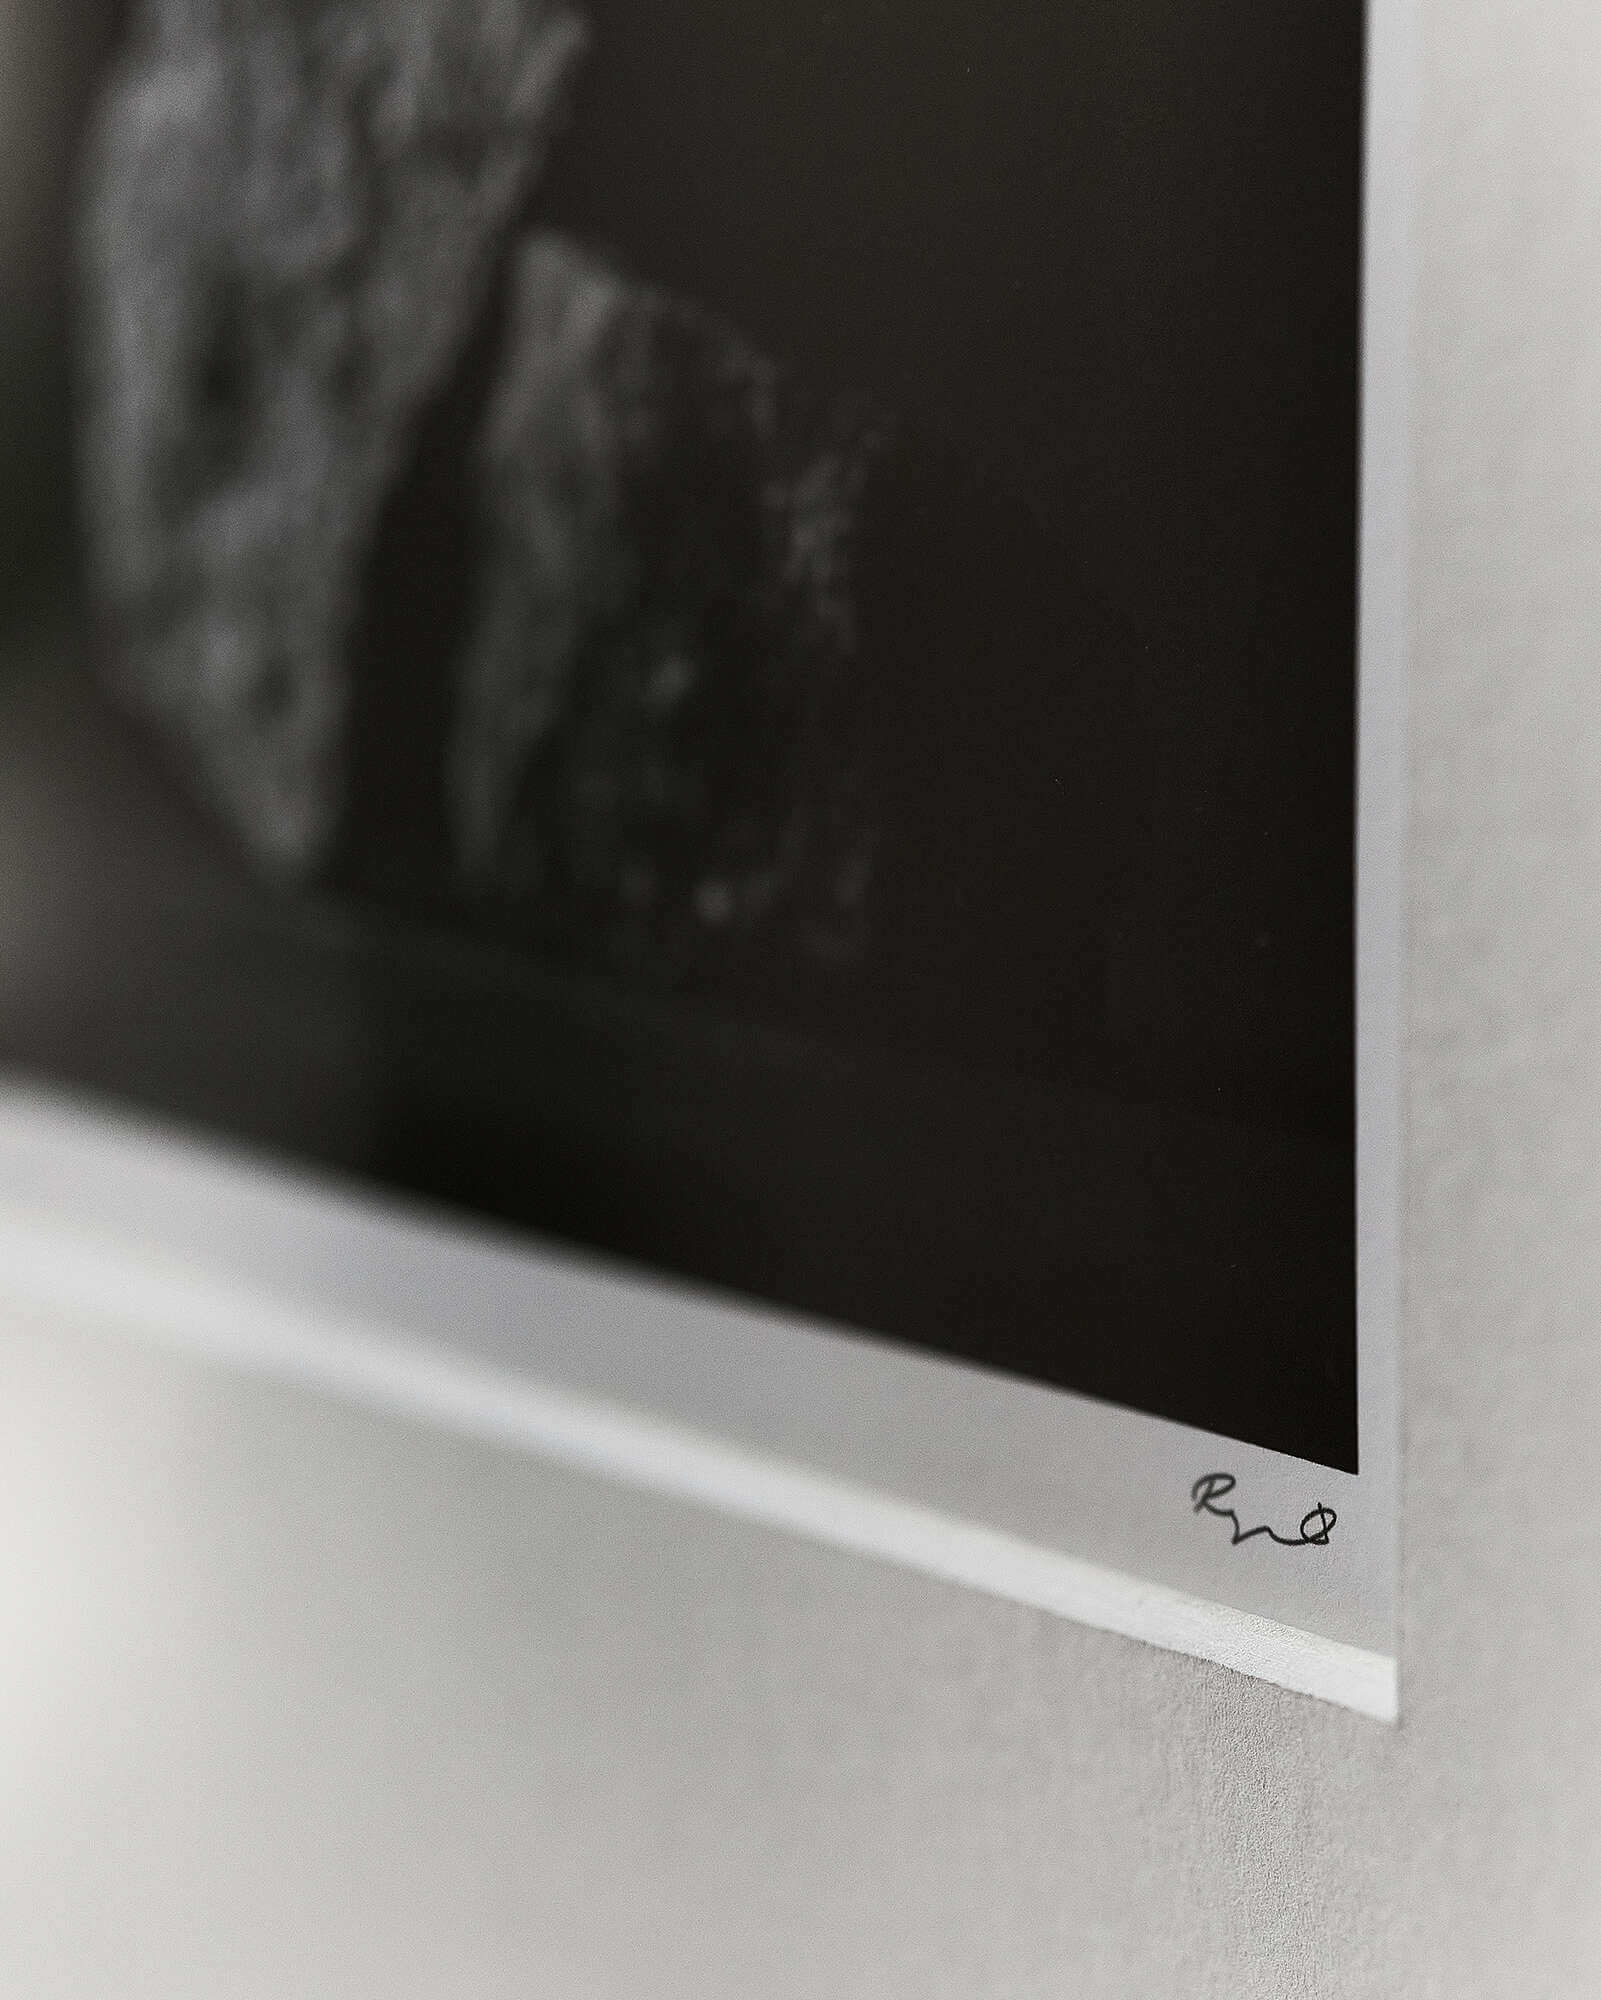 The Fine Art print Balance, by Ragnar Ómarsson shown in an inspirational interior design setting.